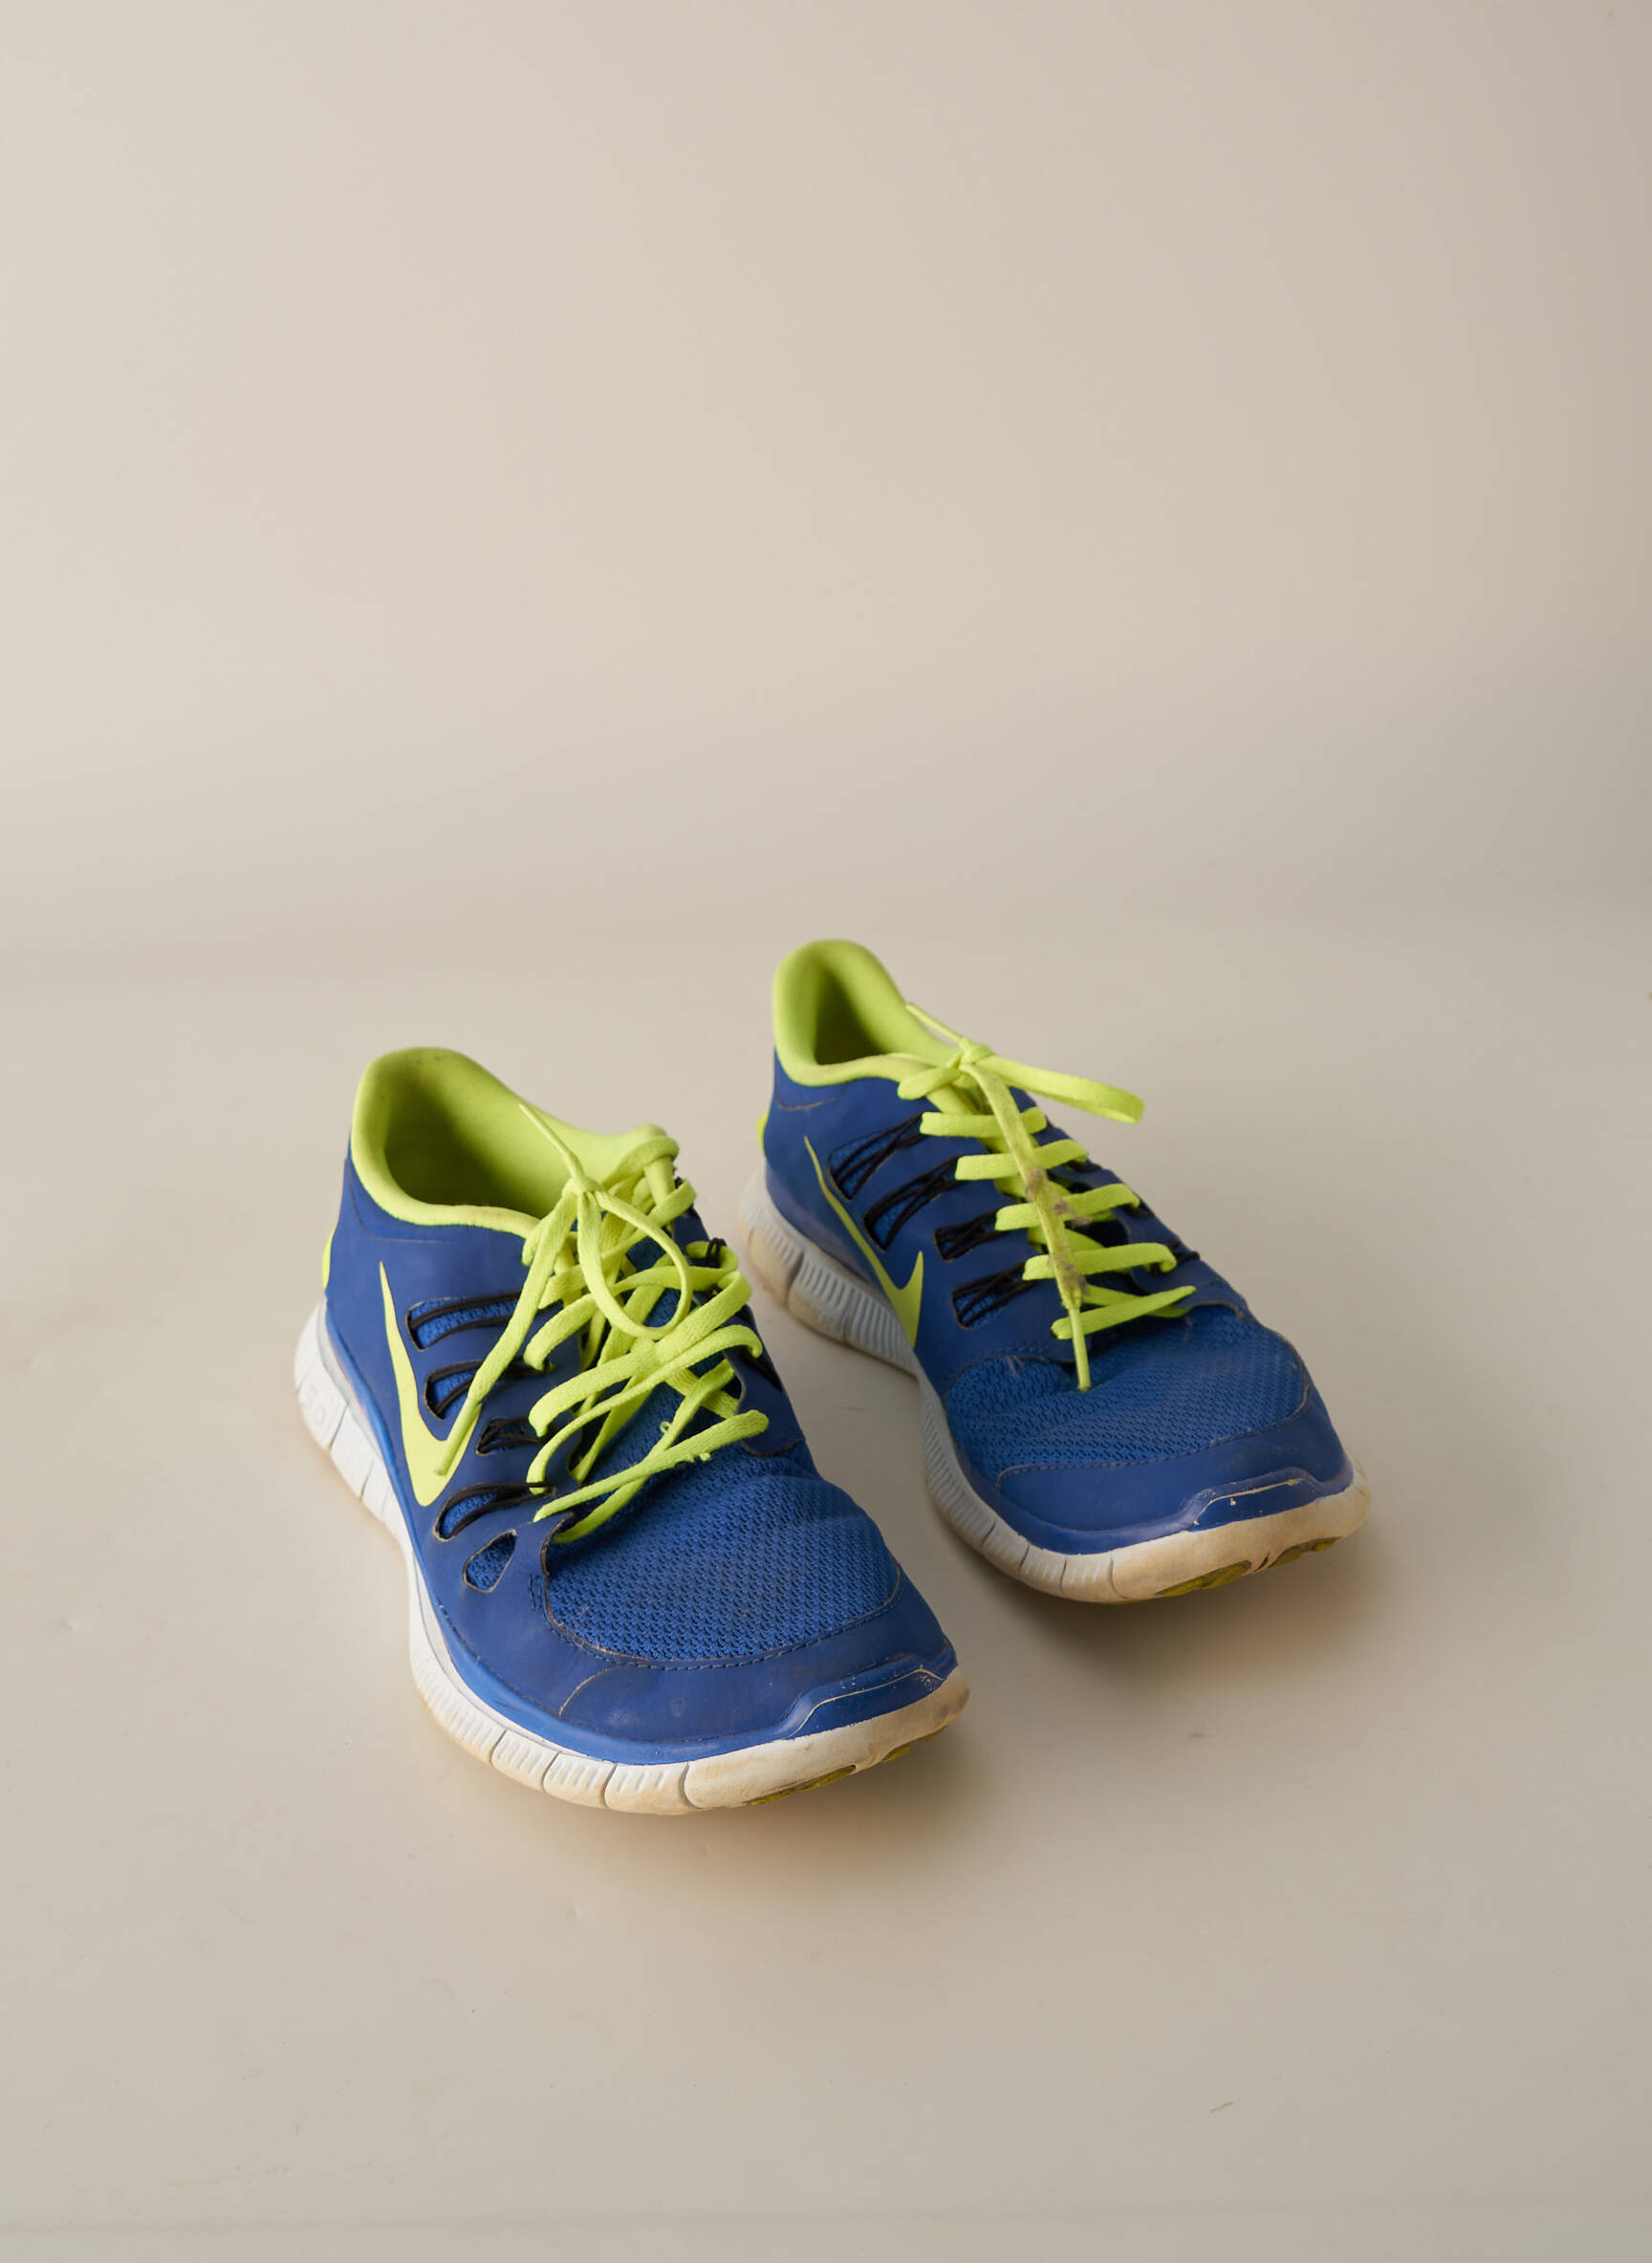 Chaussons Nike pour homme bleu